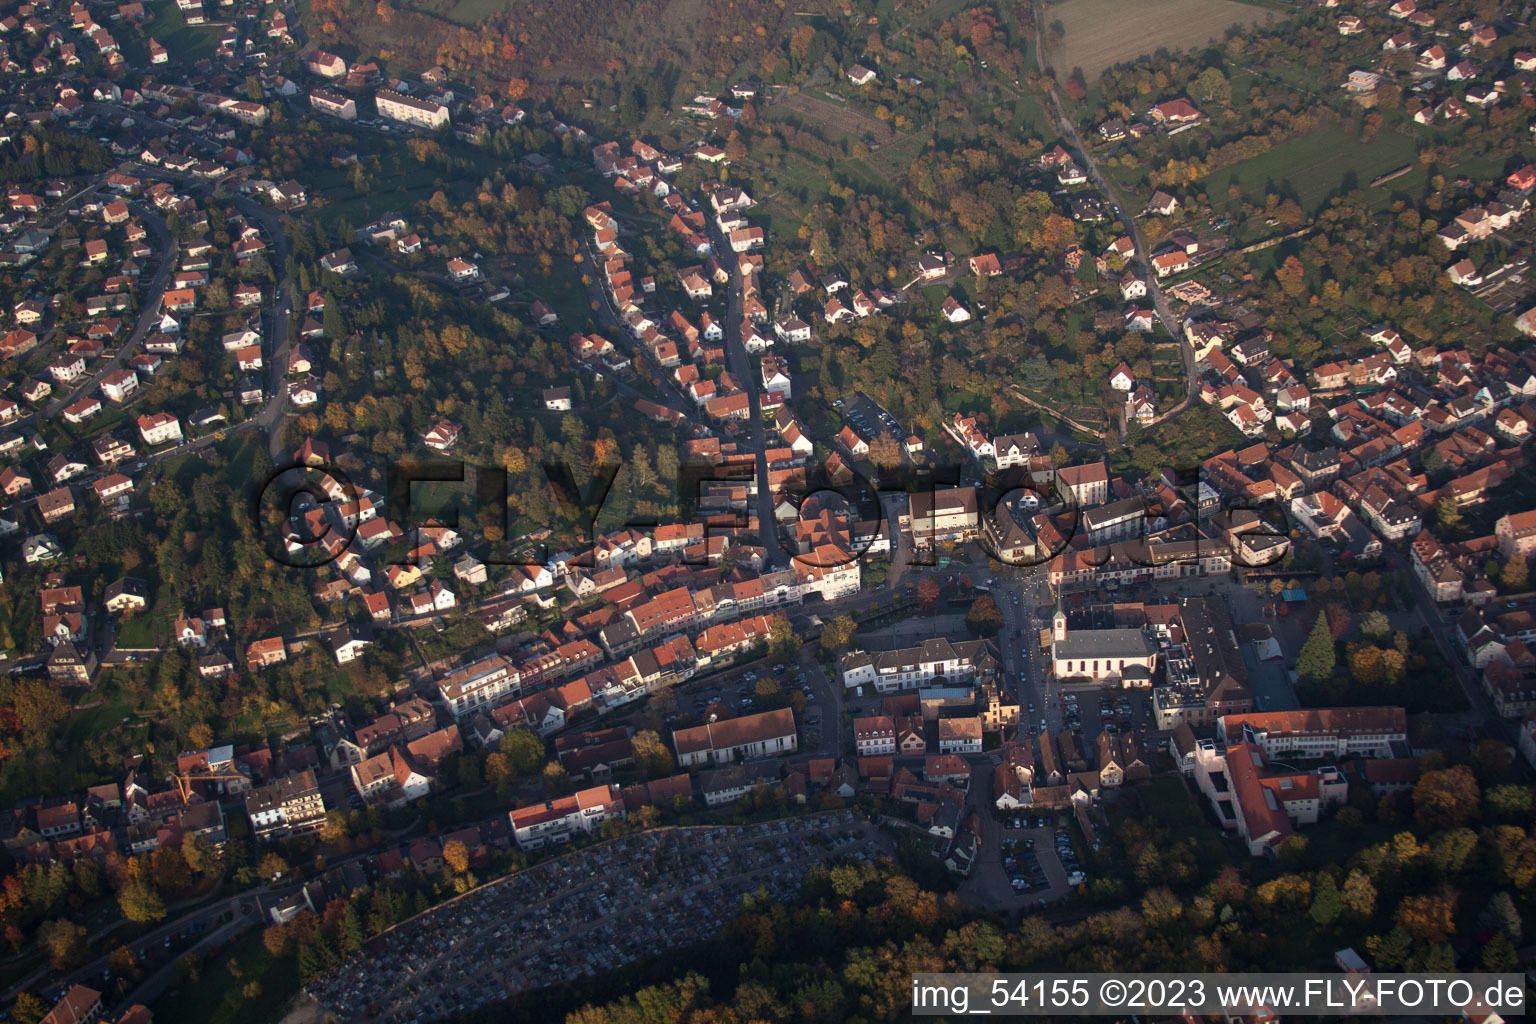 Luftbild von Niederbronn-les-Bains im Bundesland Bas-Rhin, Frankreich